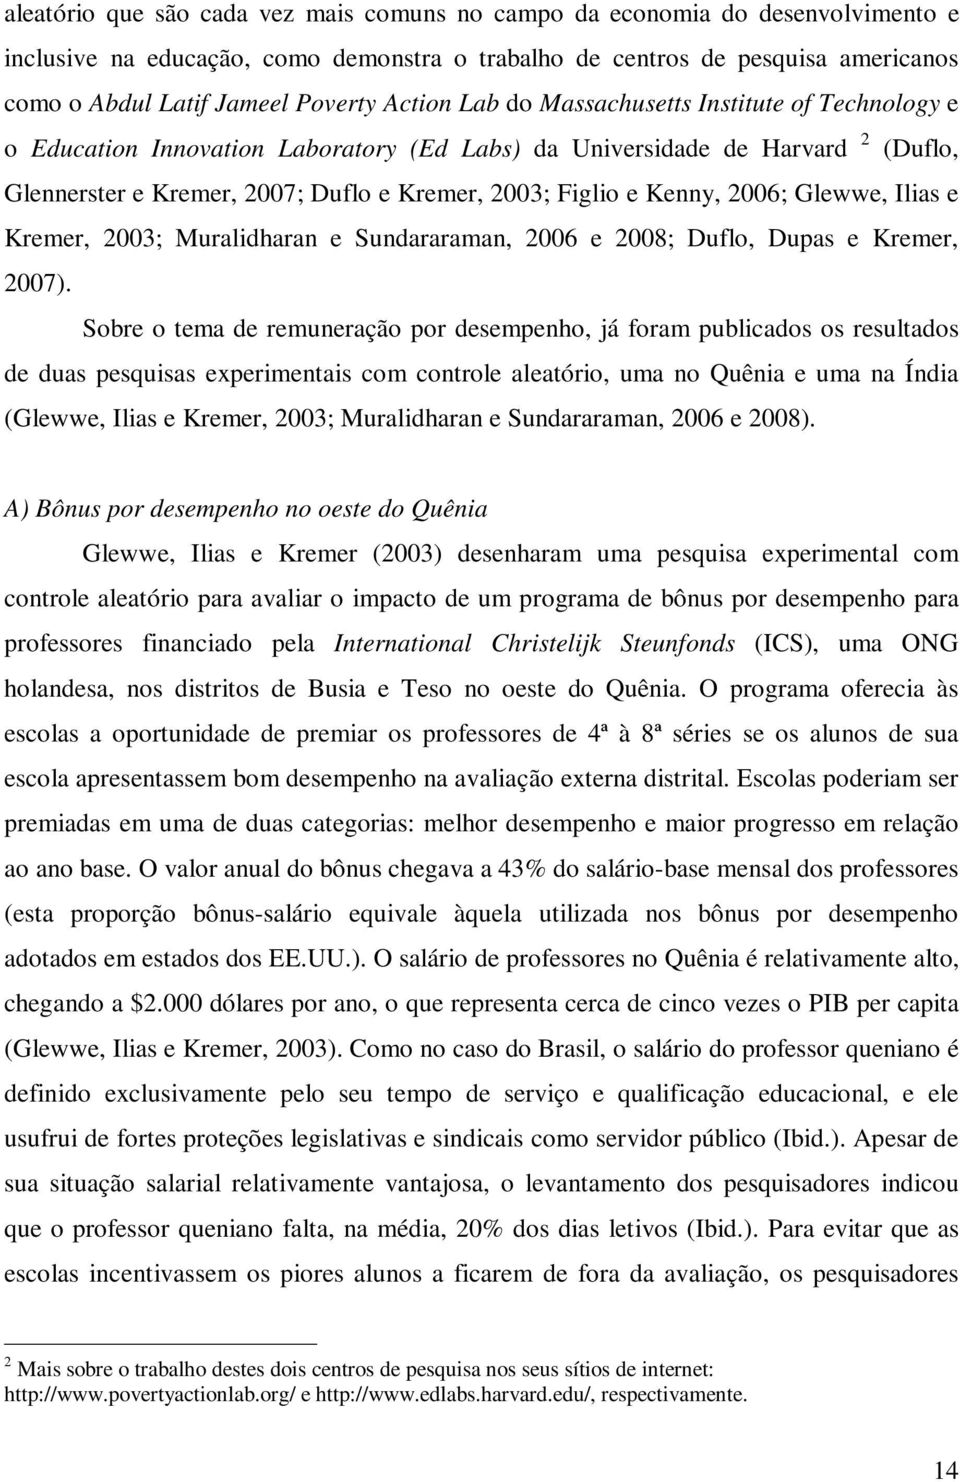 Kenny, 2006; Glewwe, Ilias e Kremer, 2003; Muralidharan e Sundararaman, 2006 e 2008; Duflo, Dupas e Kremer, 2007).